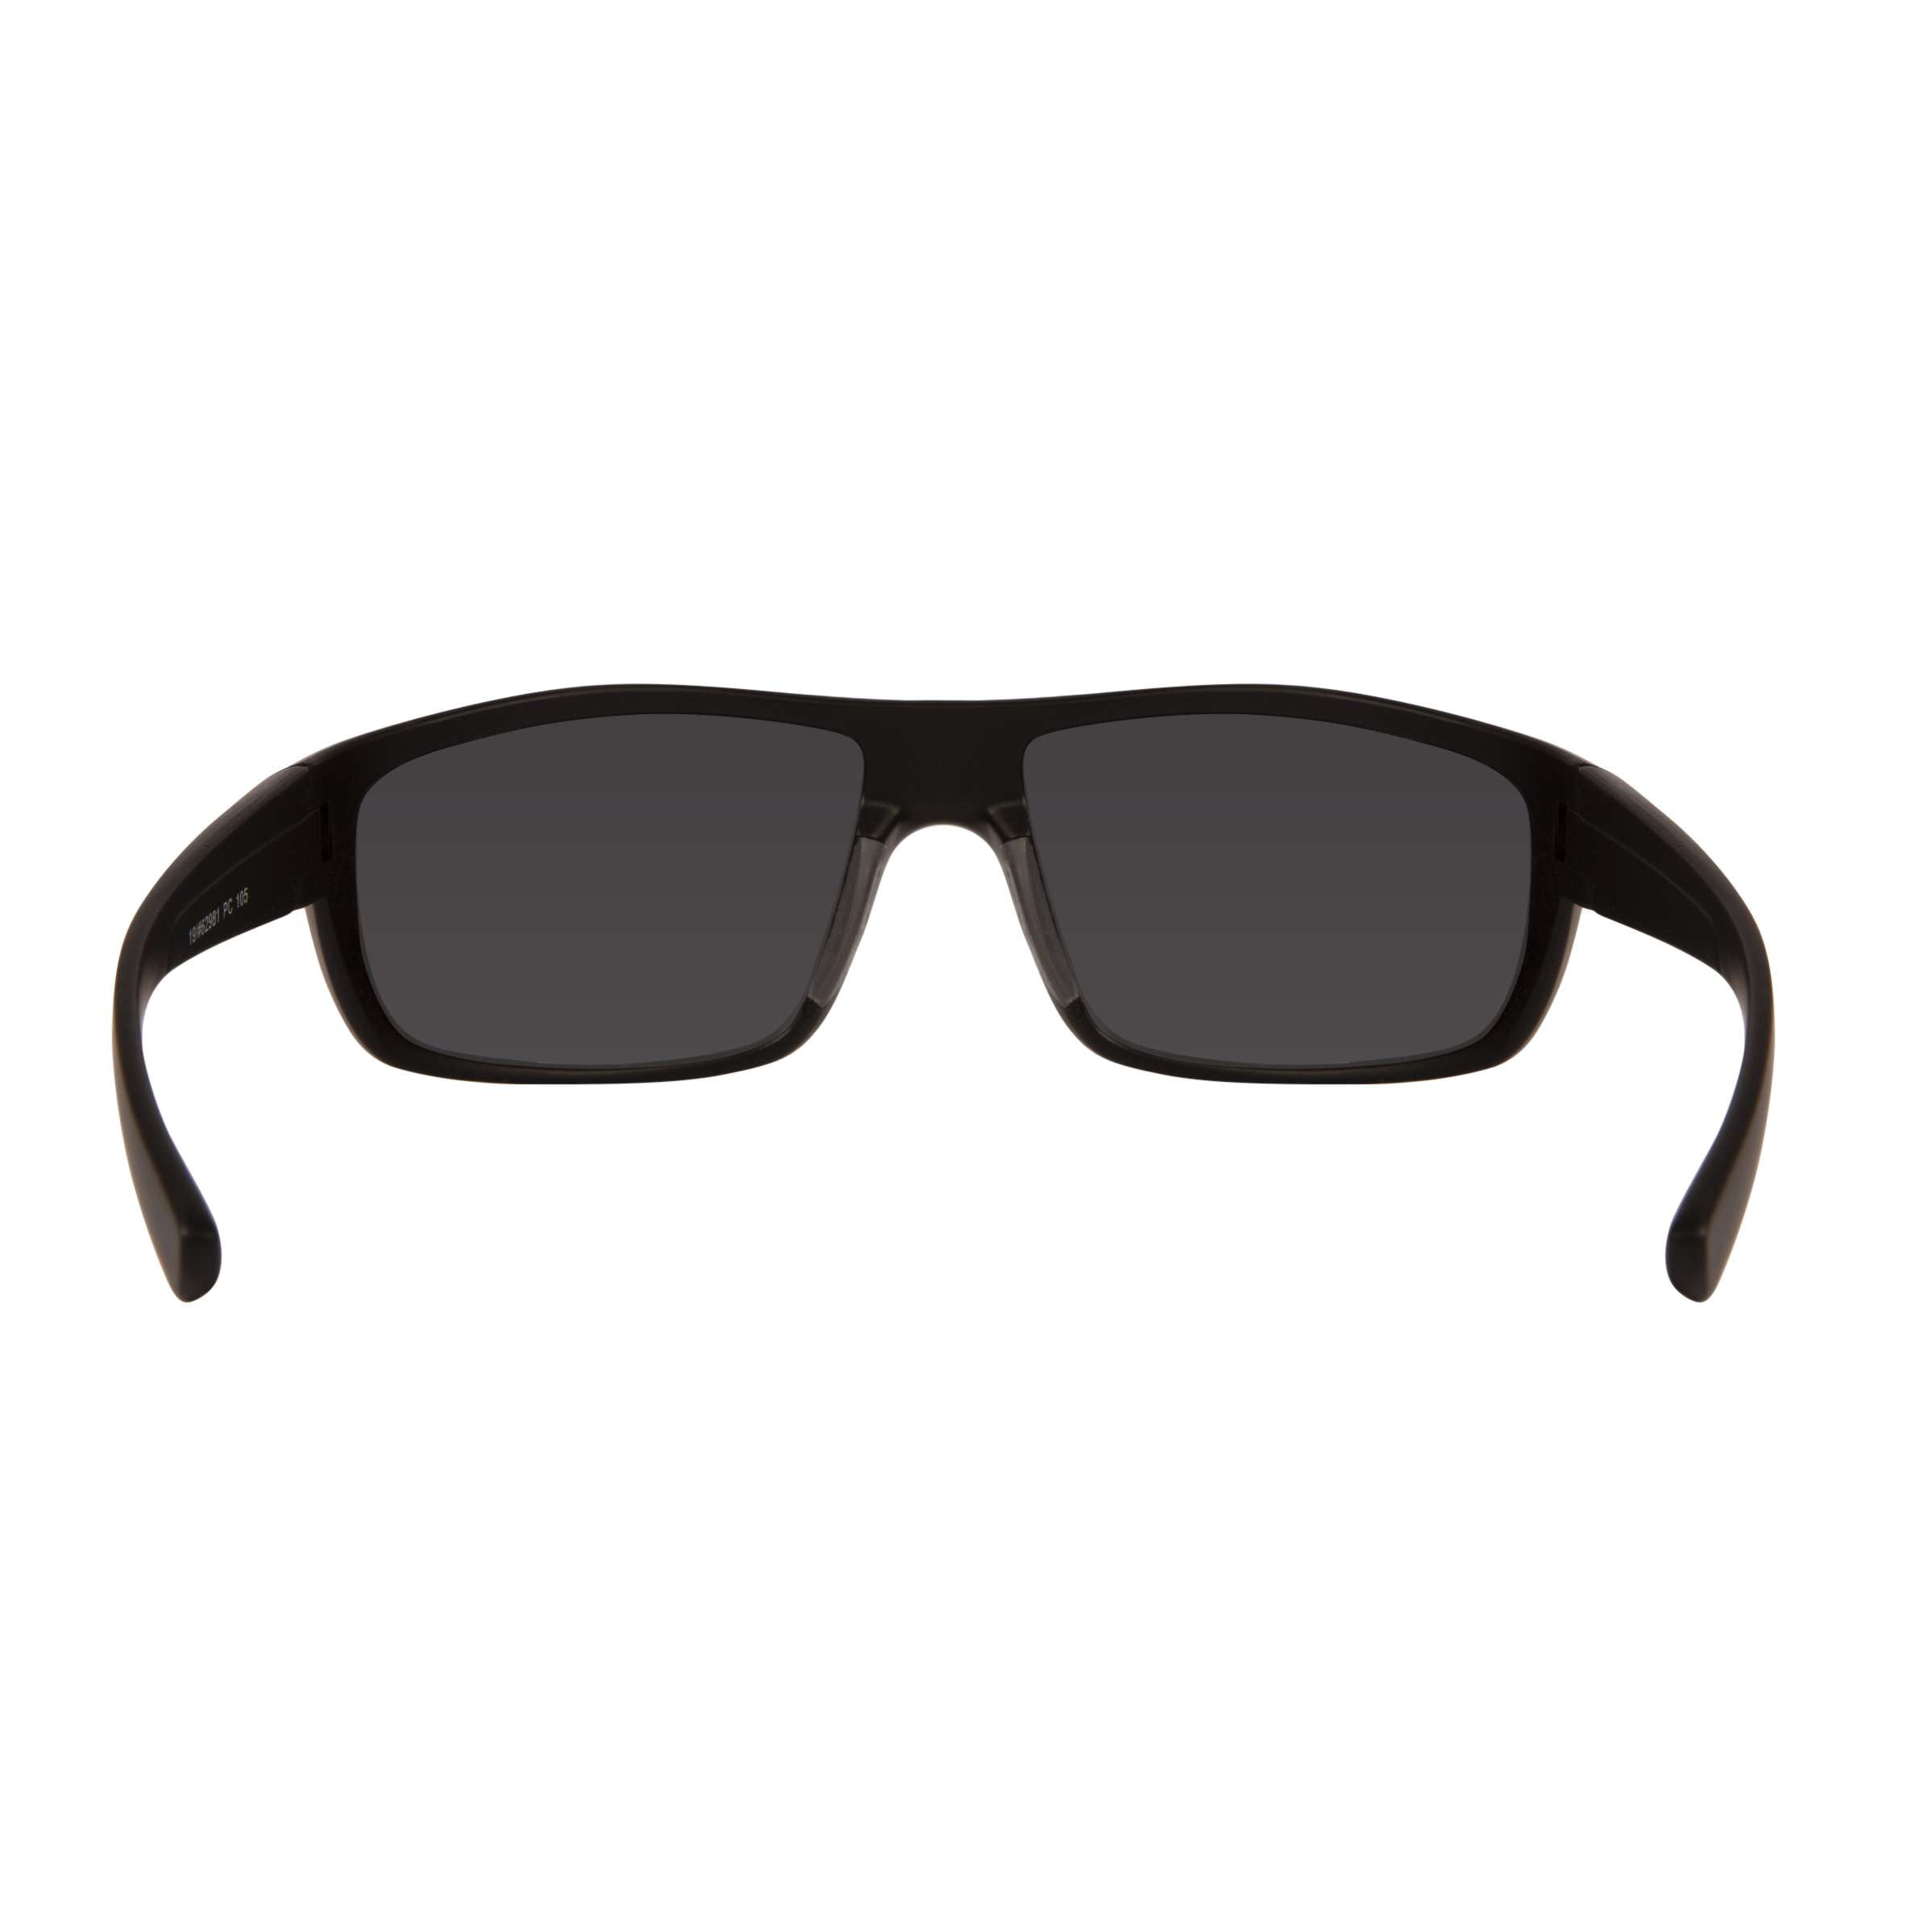 Discover 179+ piranha sunglasses pc105 best